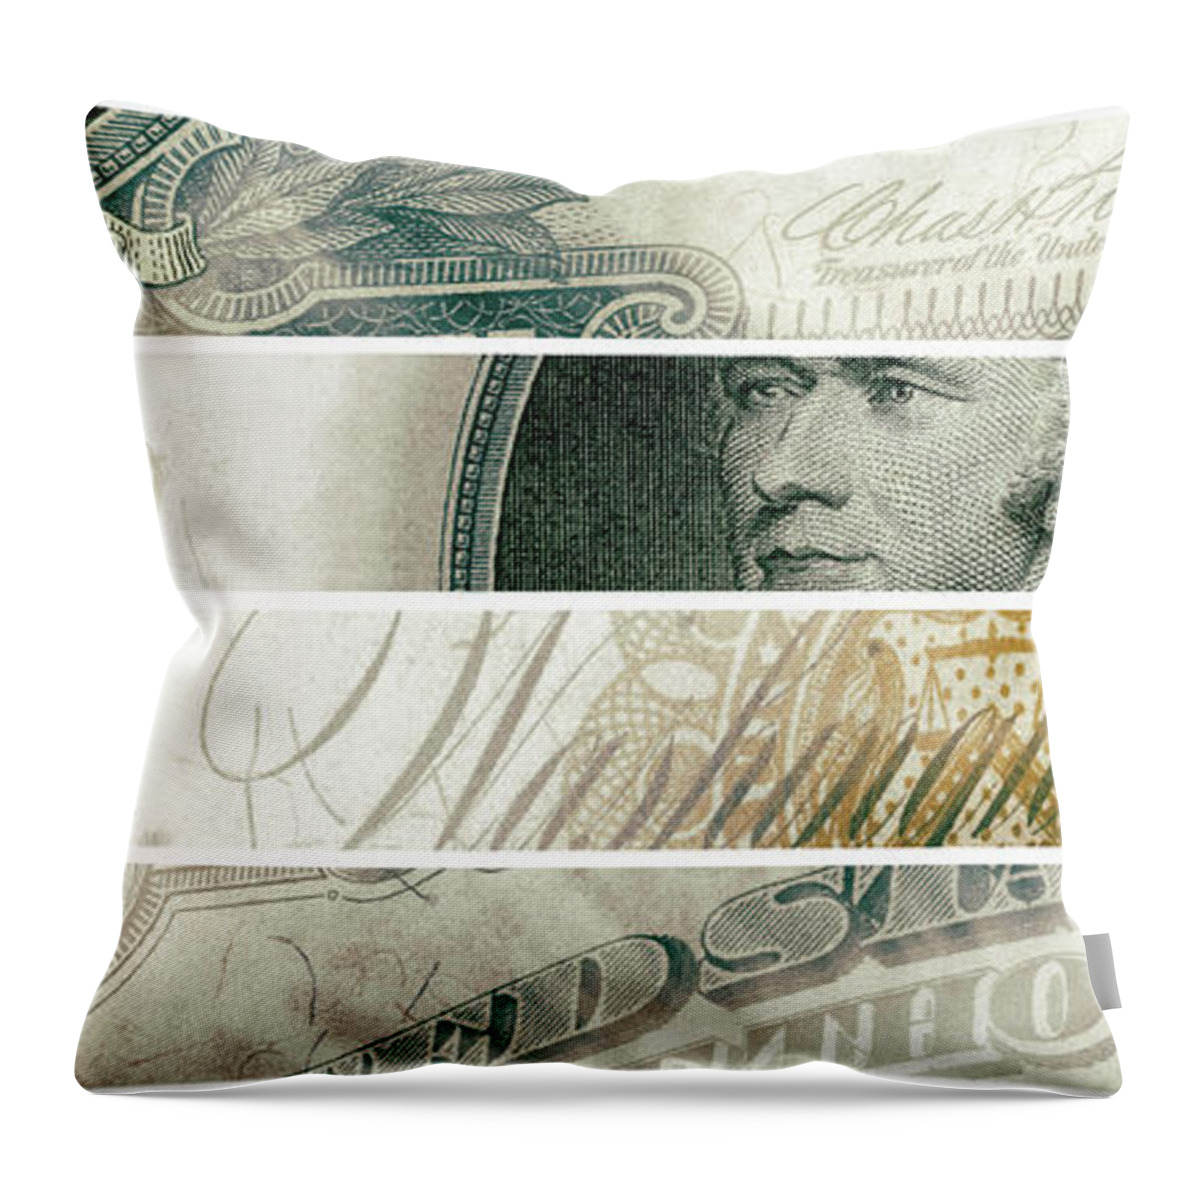 Numismatic Throw Pillow featuring the digital art Alexander Hamilton 1907 American One Thousand Dollar Bill Currency Starburst Artwork by Shawn O'Brien